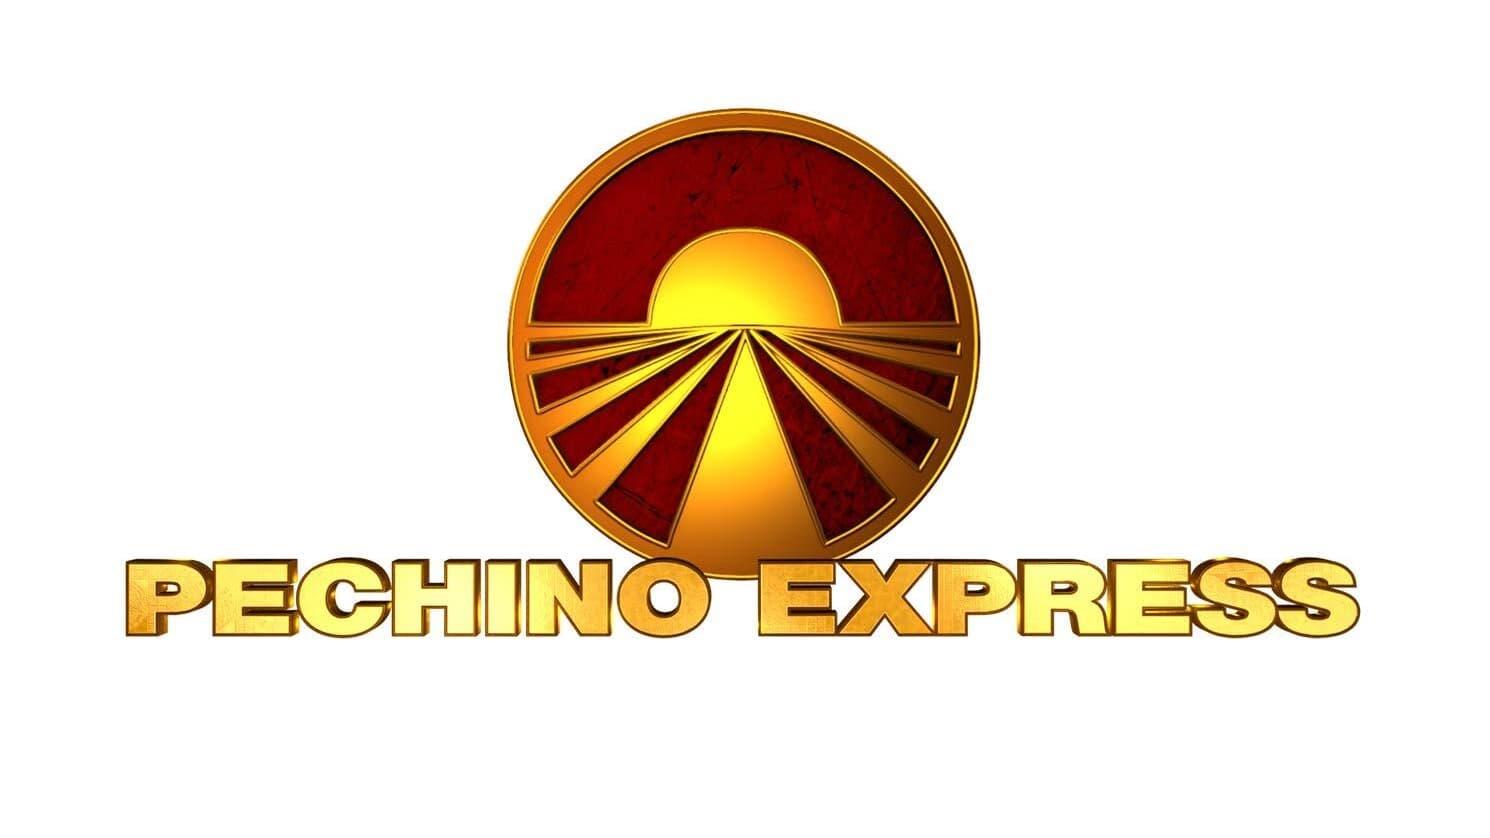 Pechino Express backdrop